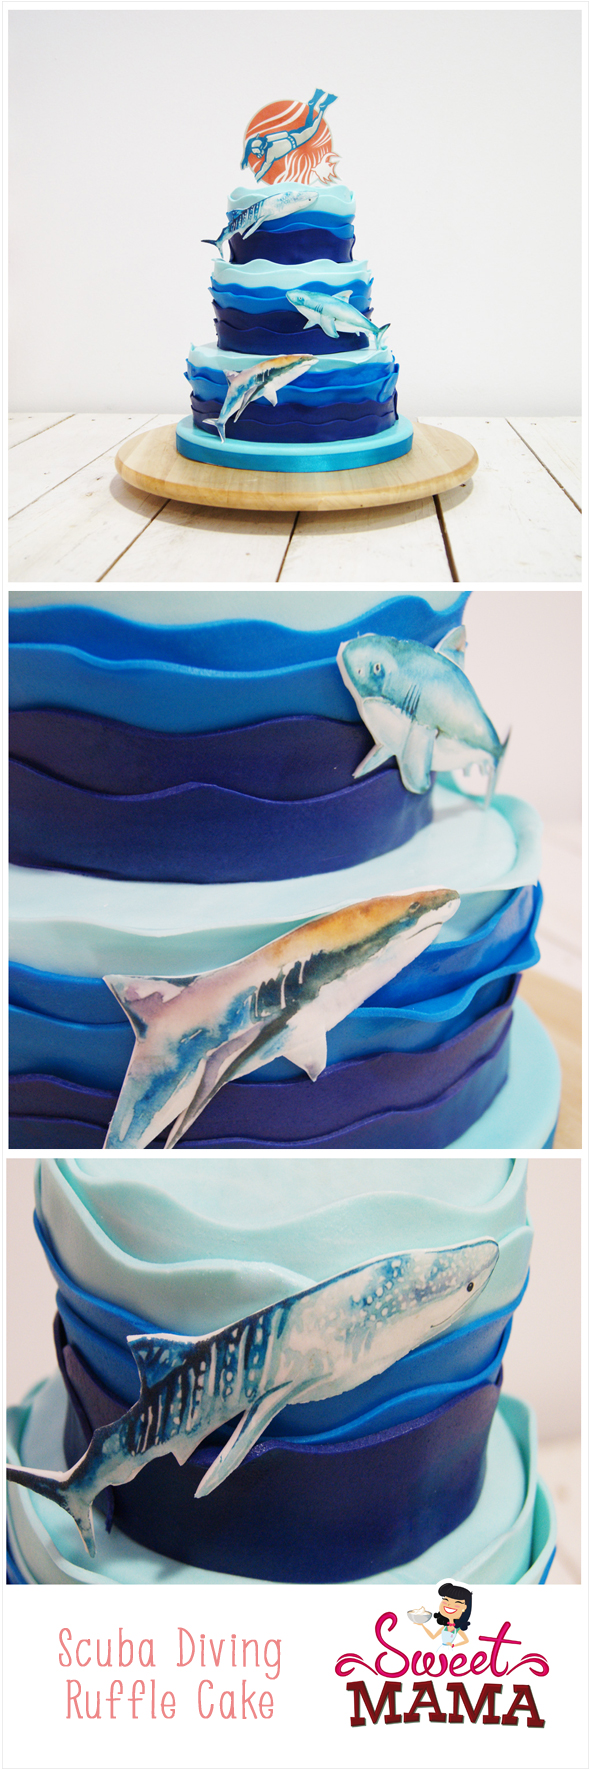 sweetmama-pastel-fondant-submarinismo-con-tiburones